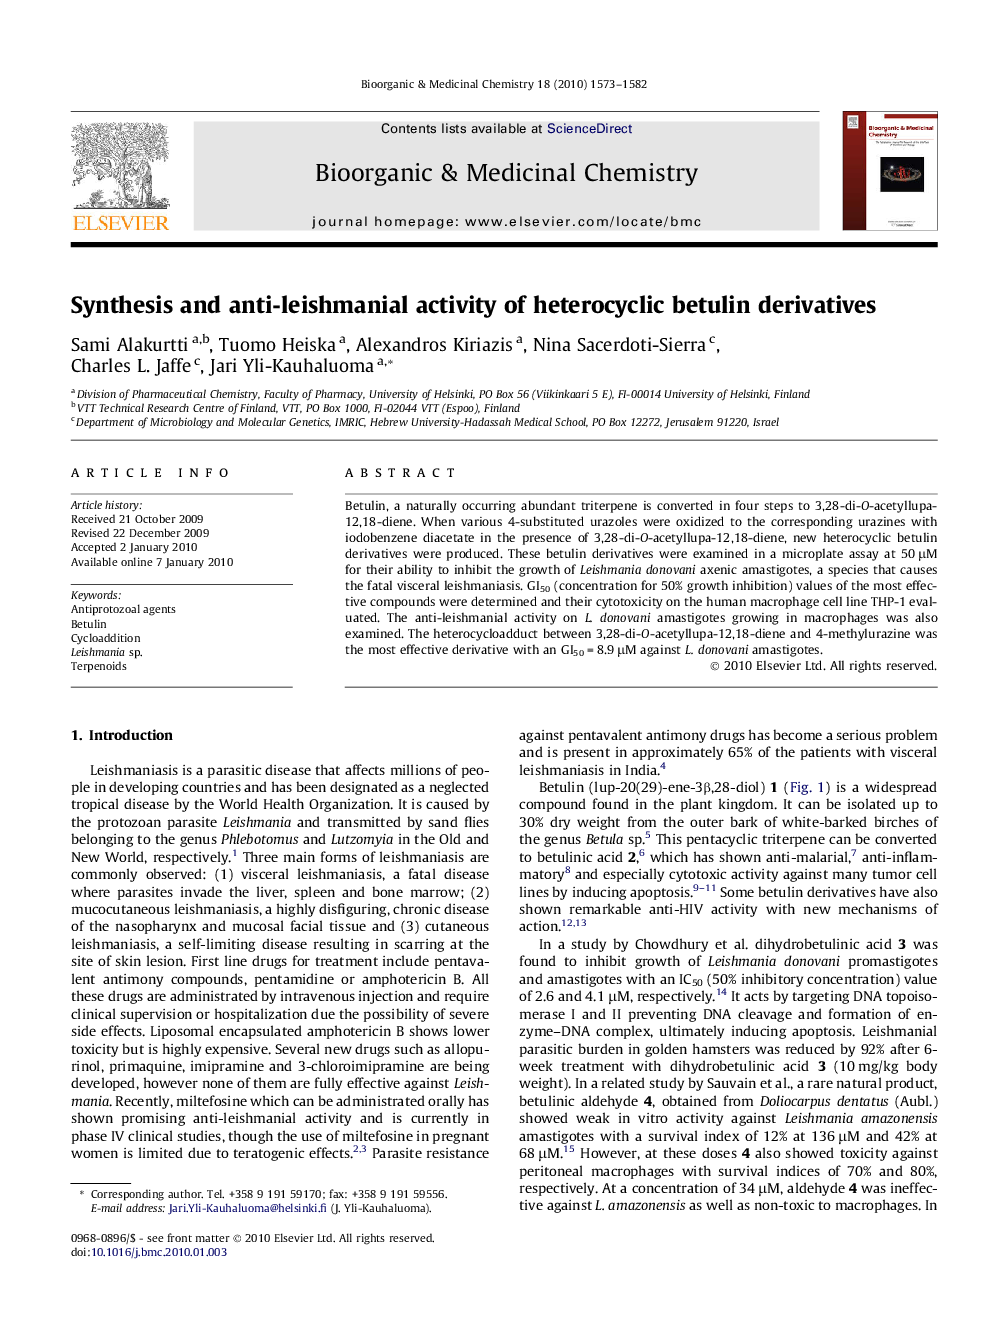 Synthesis and anti-leishmanial activity of heterocyclic betulin derivatives